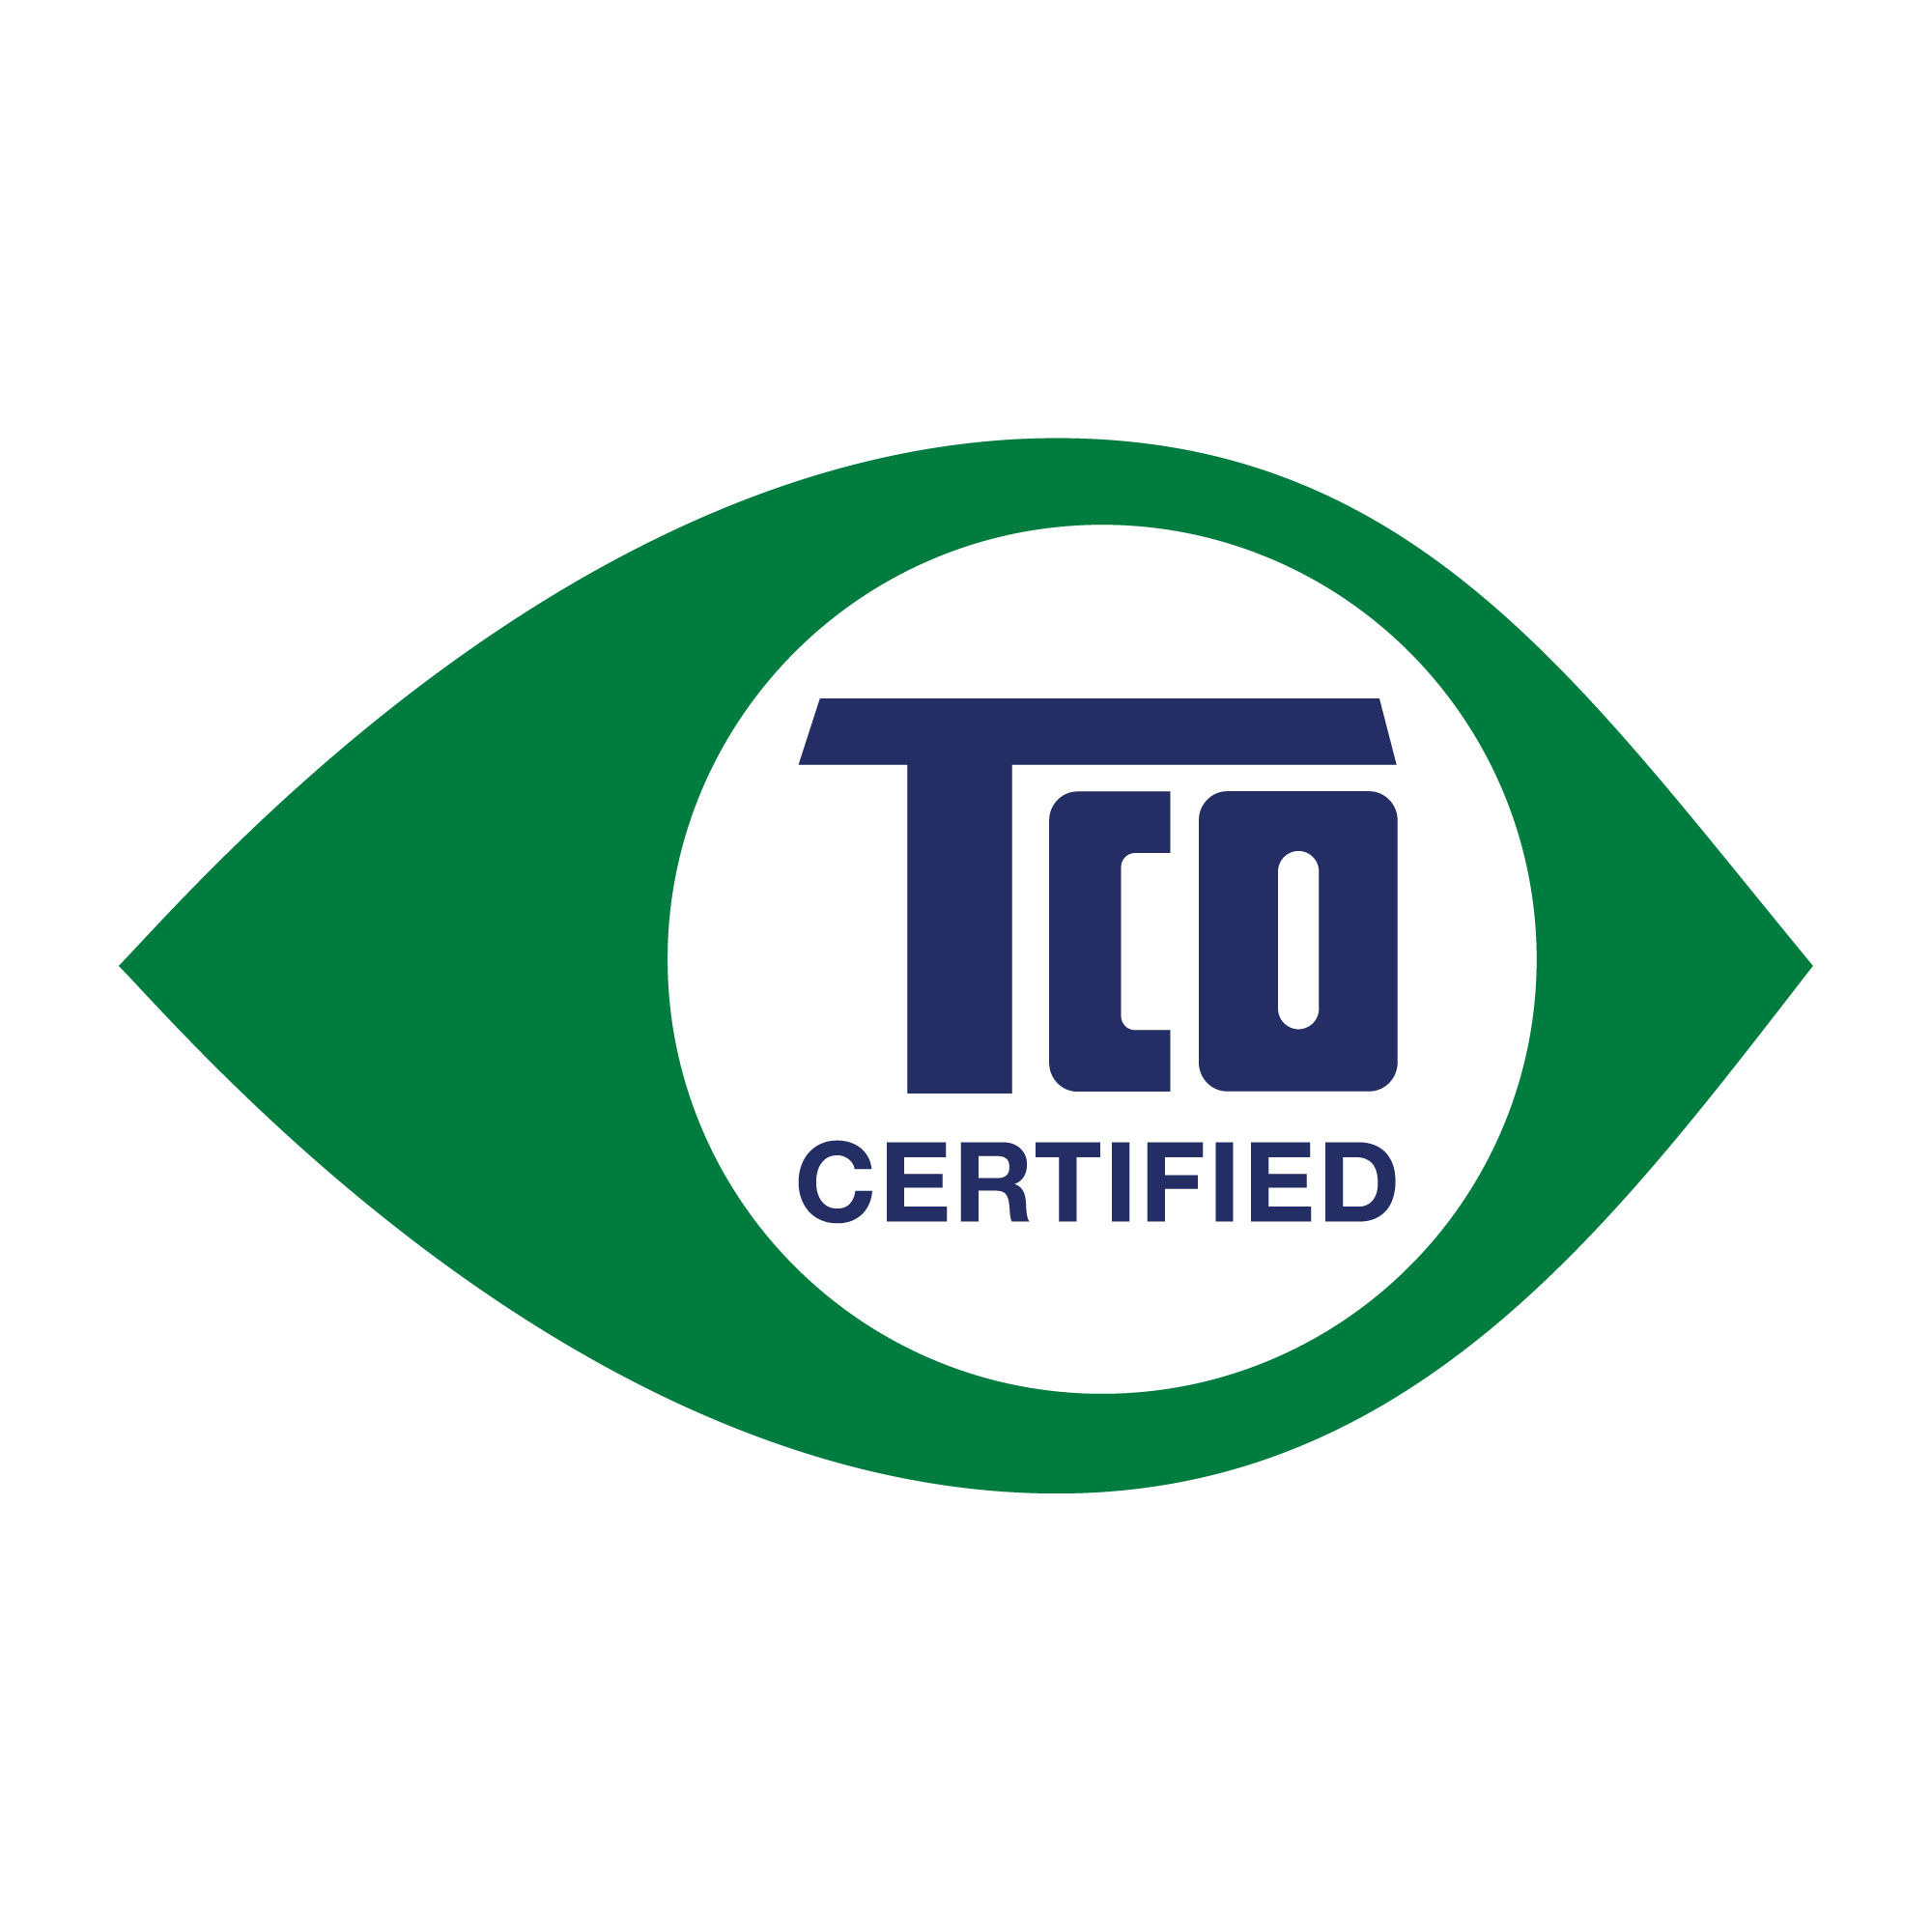 TCO Development